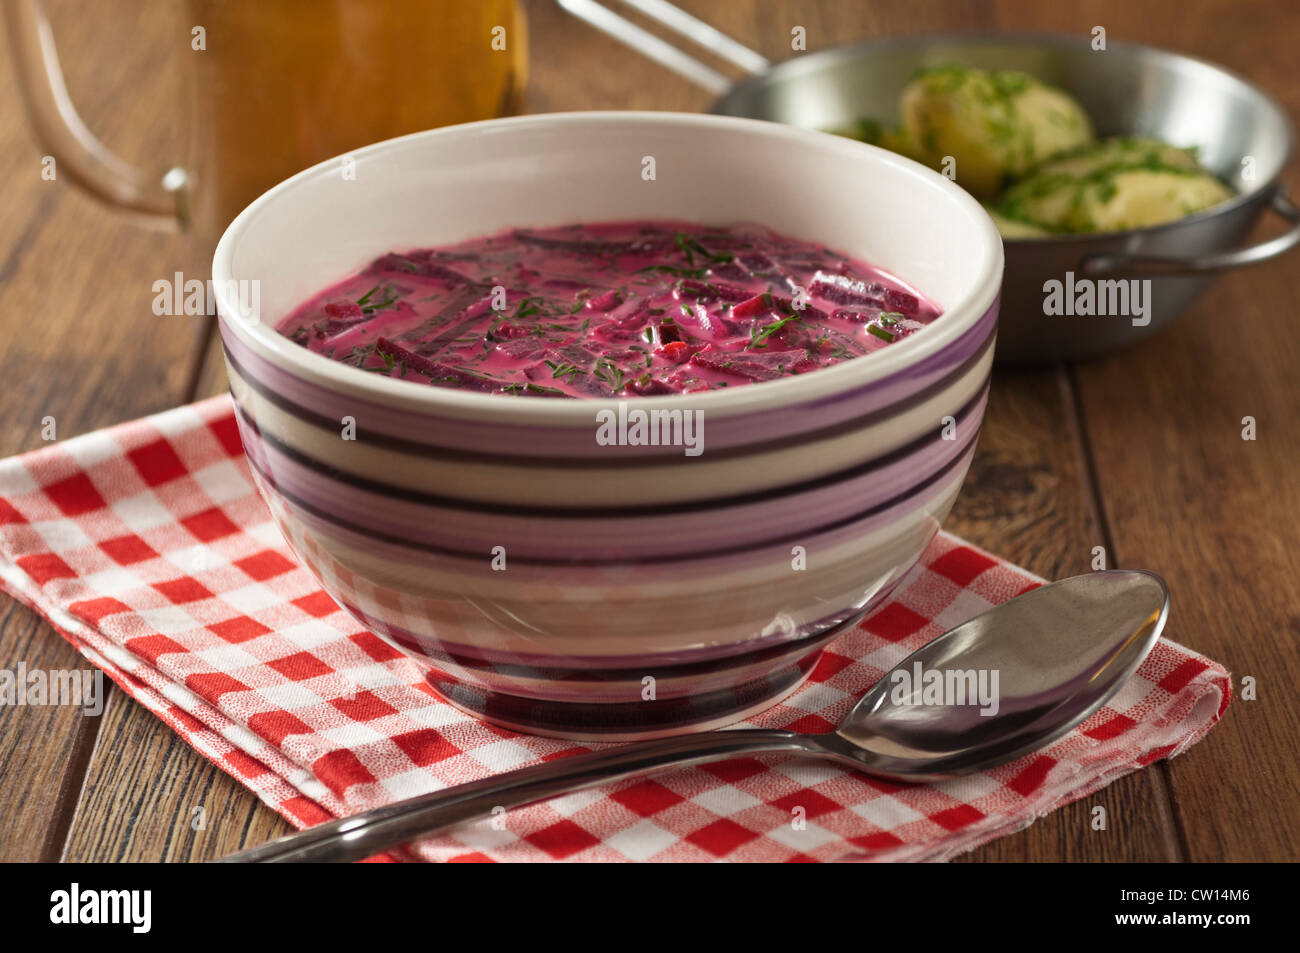 Lithuanian food Borscht Beetroot soup Stock Photo